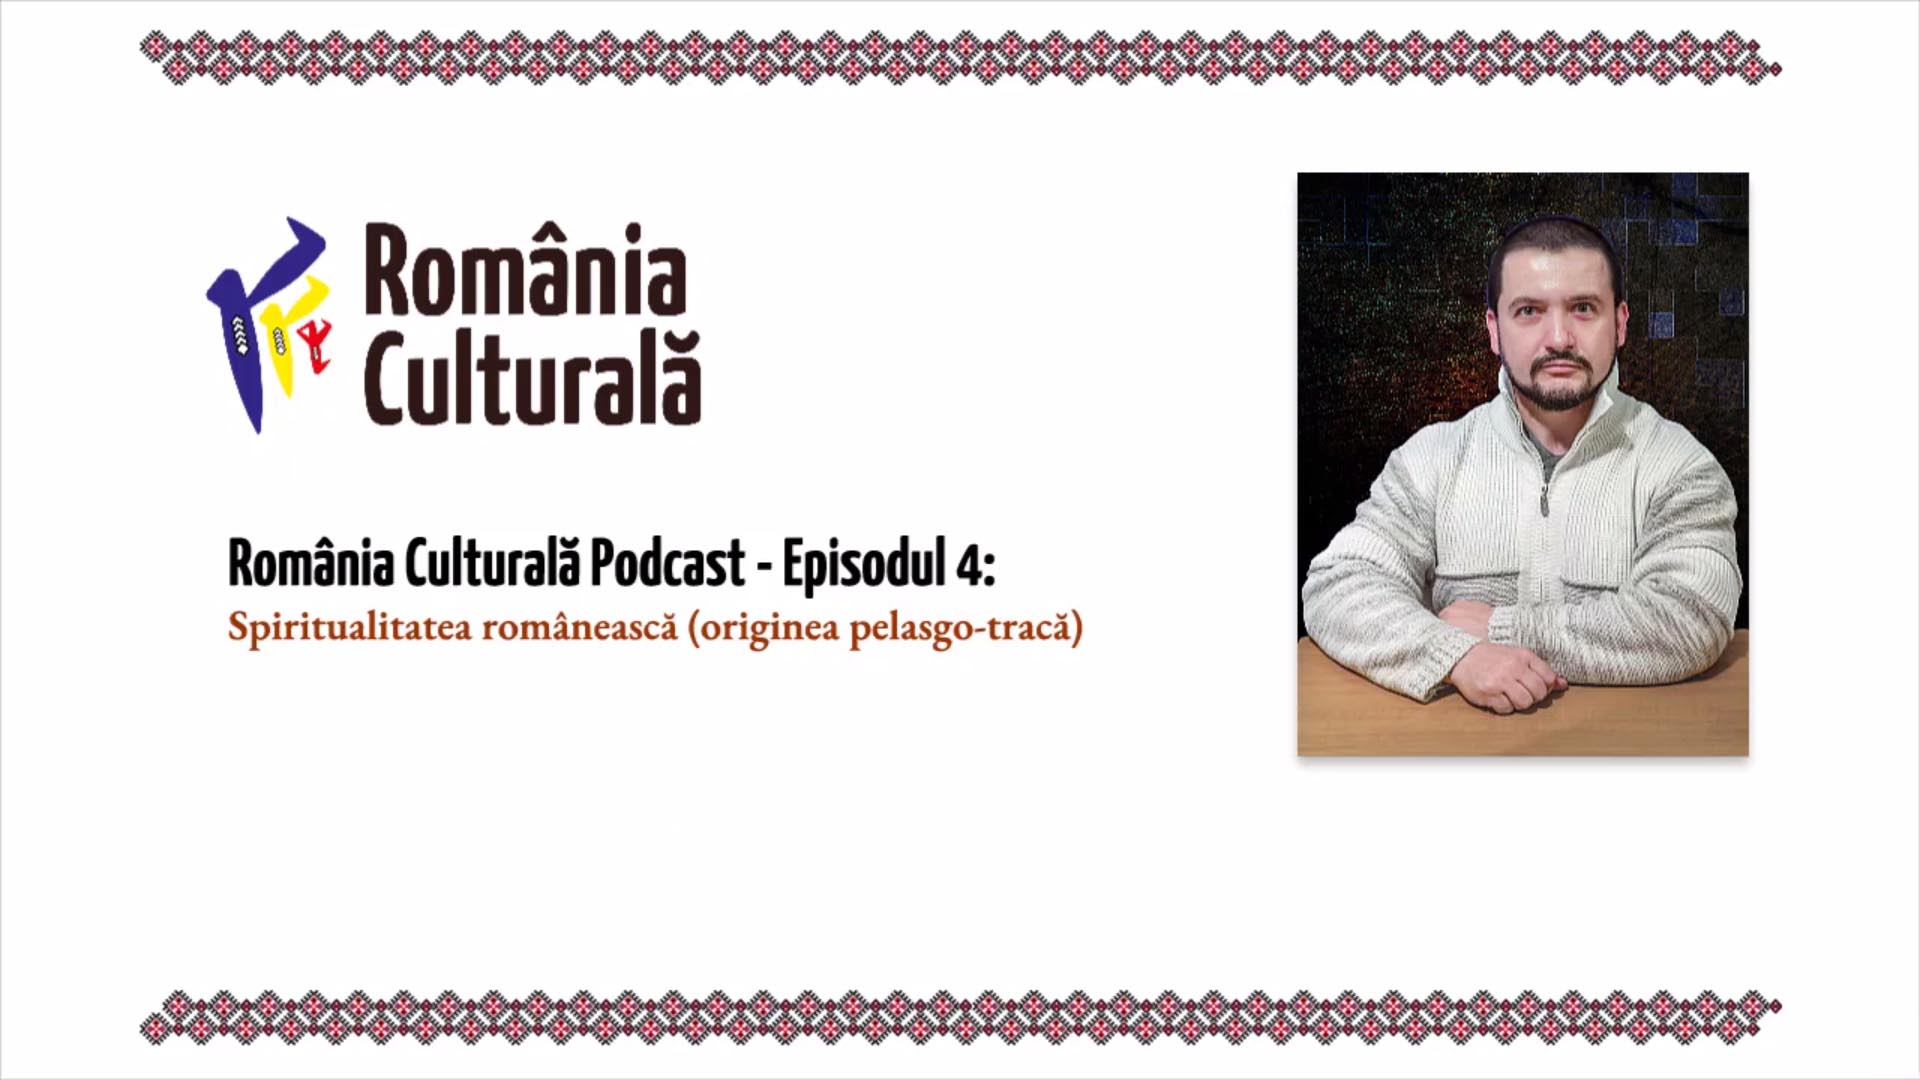 rrc podcast, rrc, podcast, romania culturala, revista romania culturala podcast, spiritualitatea romaneasca